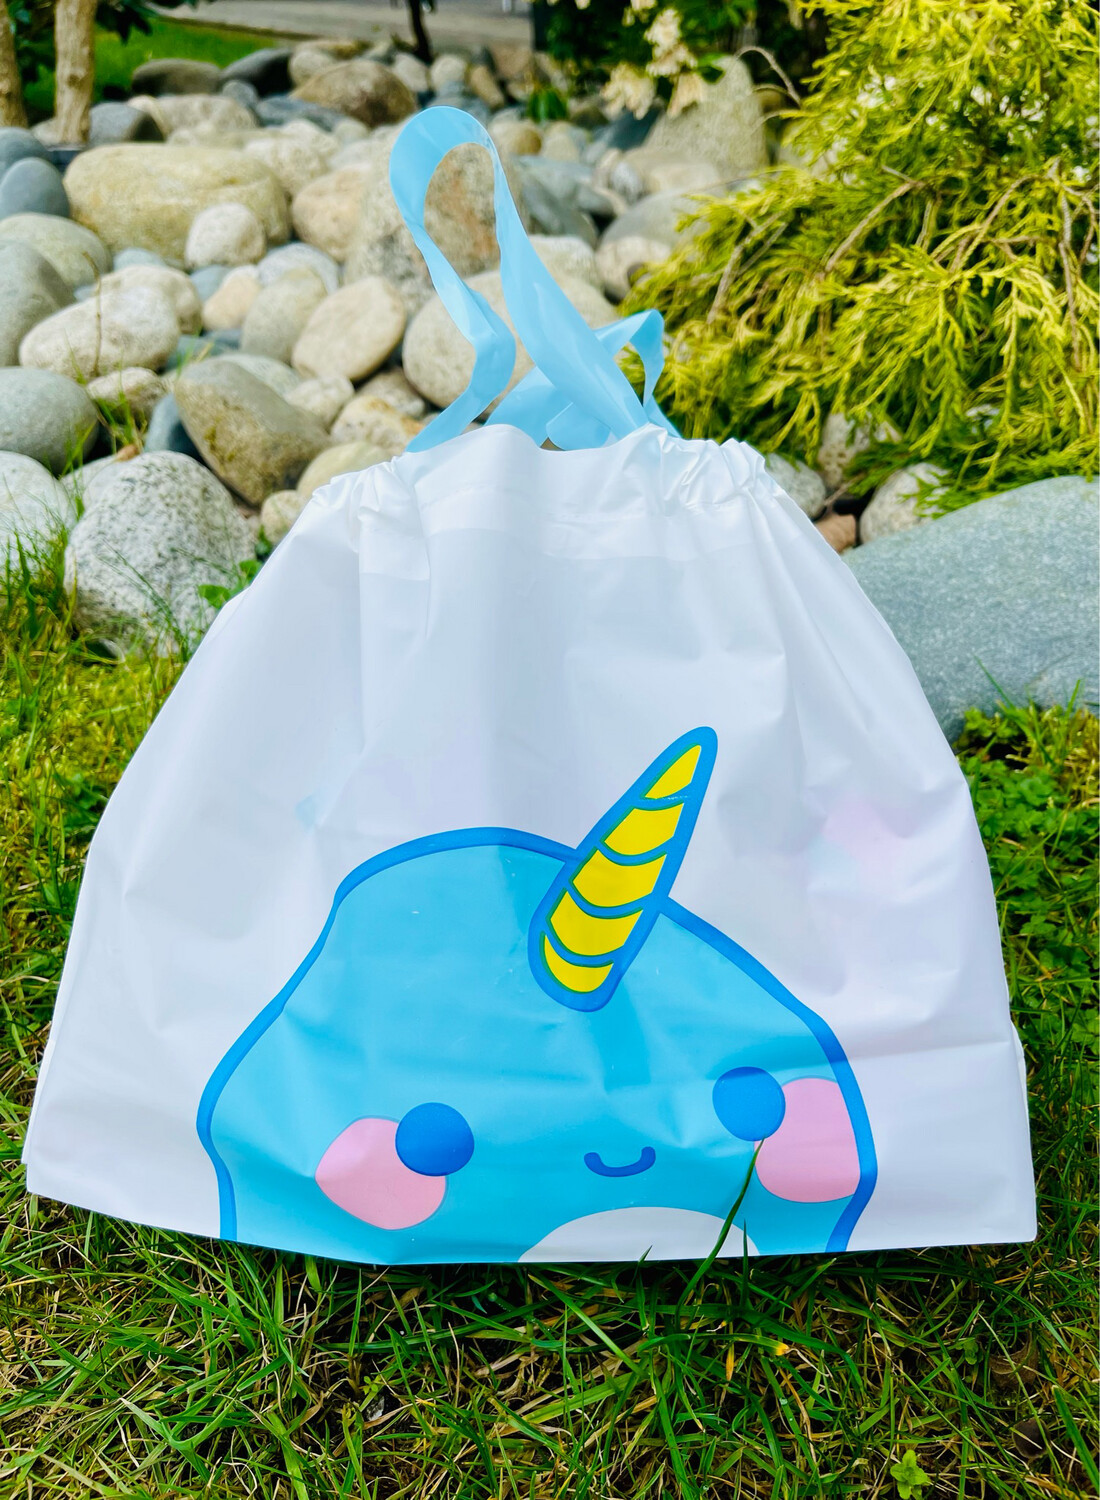 Rainbowcatz Mystery Squishy Grab Bag $50